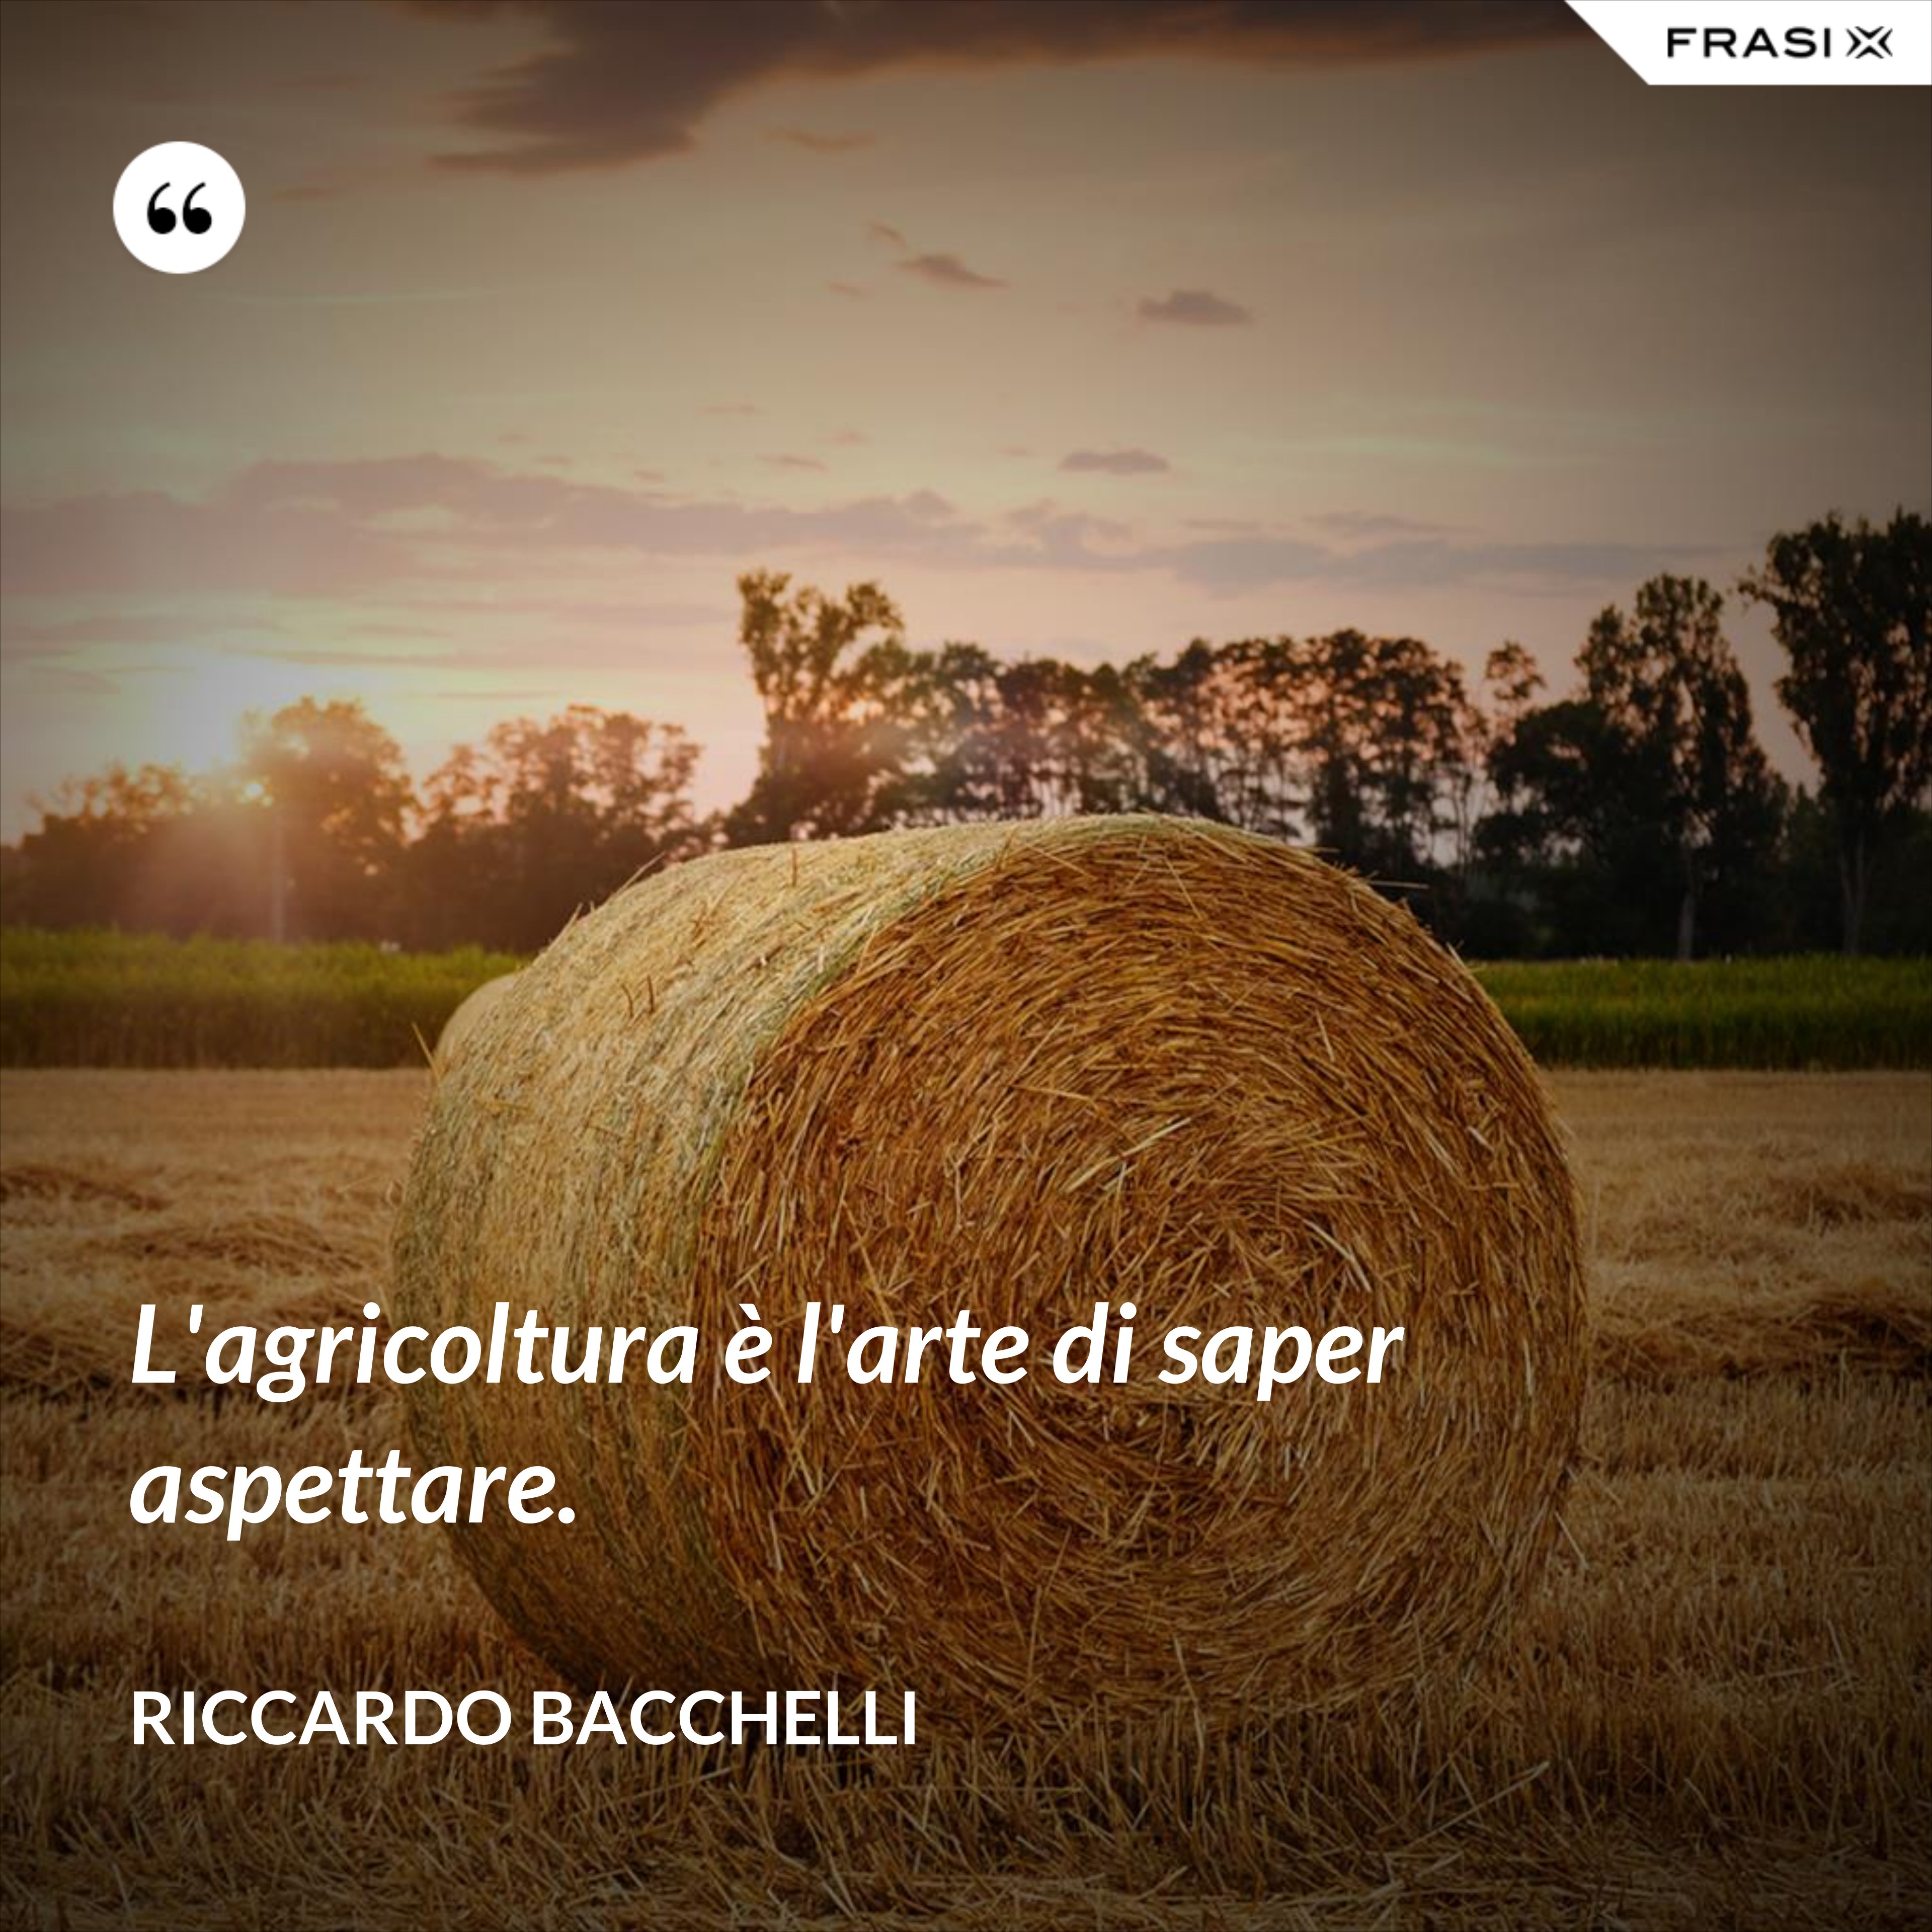 L'agricoltura è l'arte di saper aspettare. - Riccardo Bacchelli